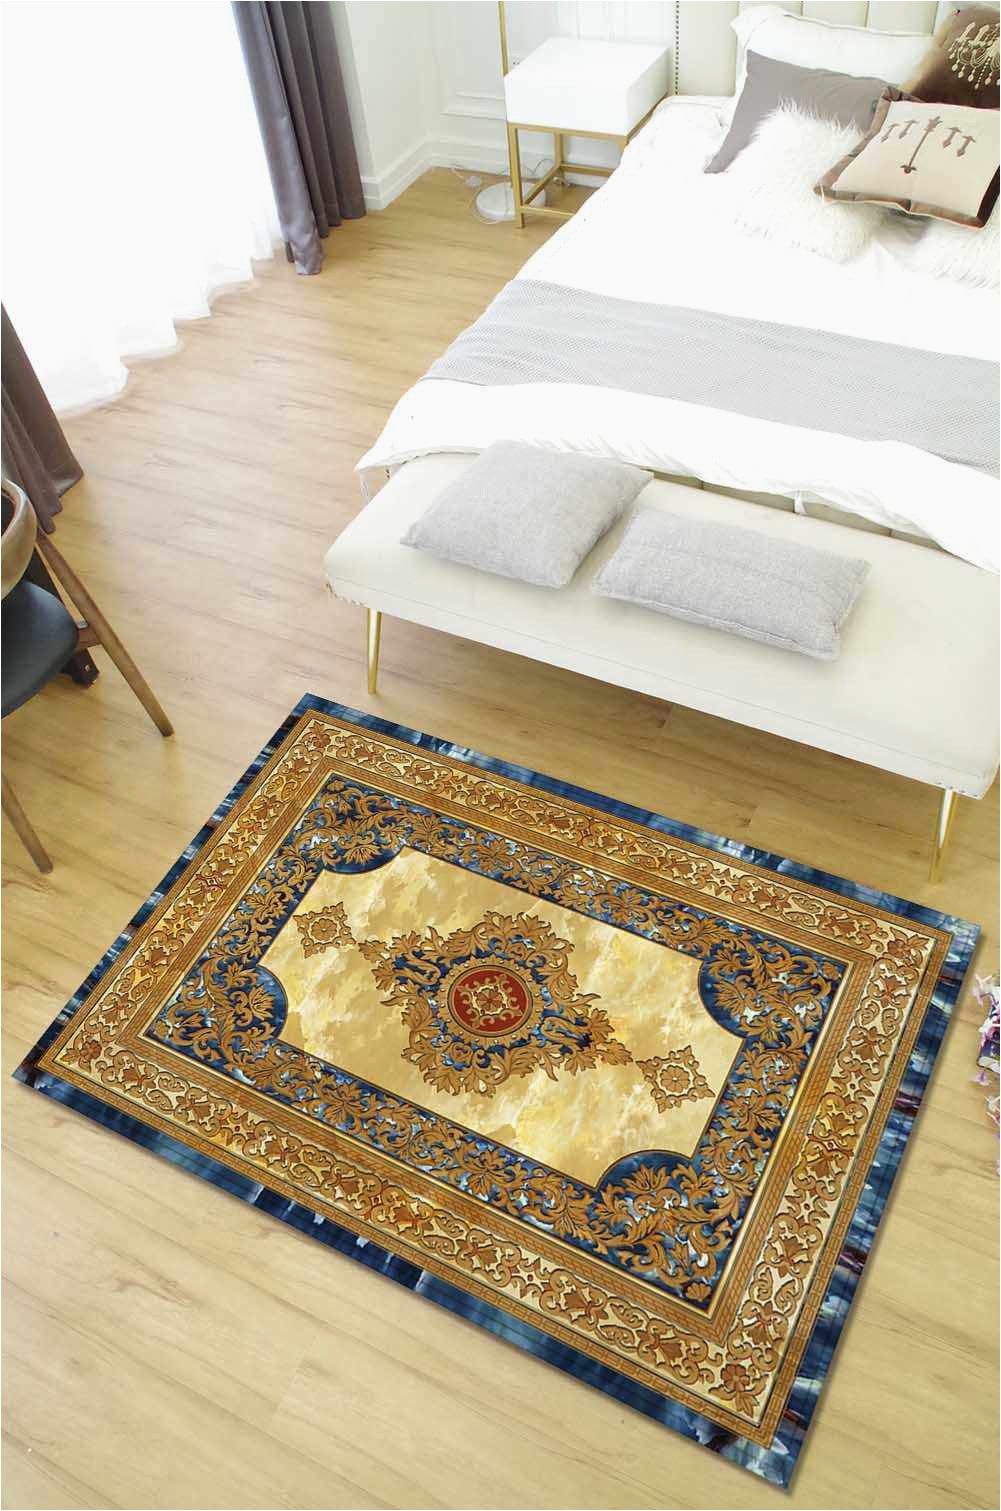 Zeegle European Living Room Carpet Anti slip Floor Mats Bedroom Bed Blanket Carpet Sofa Table Area q50